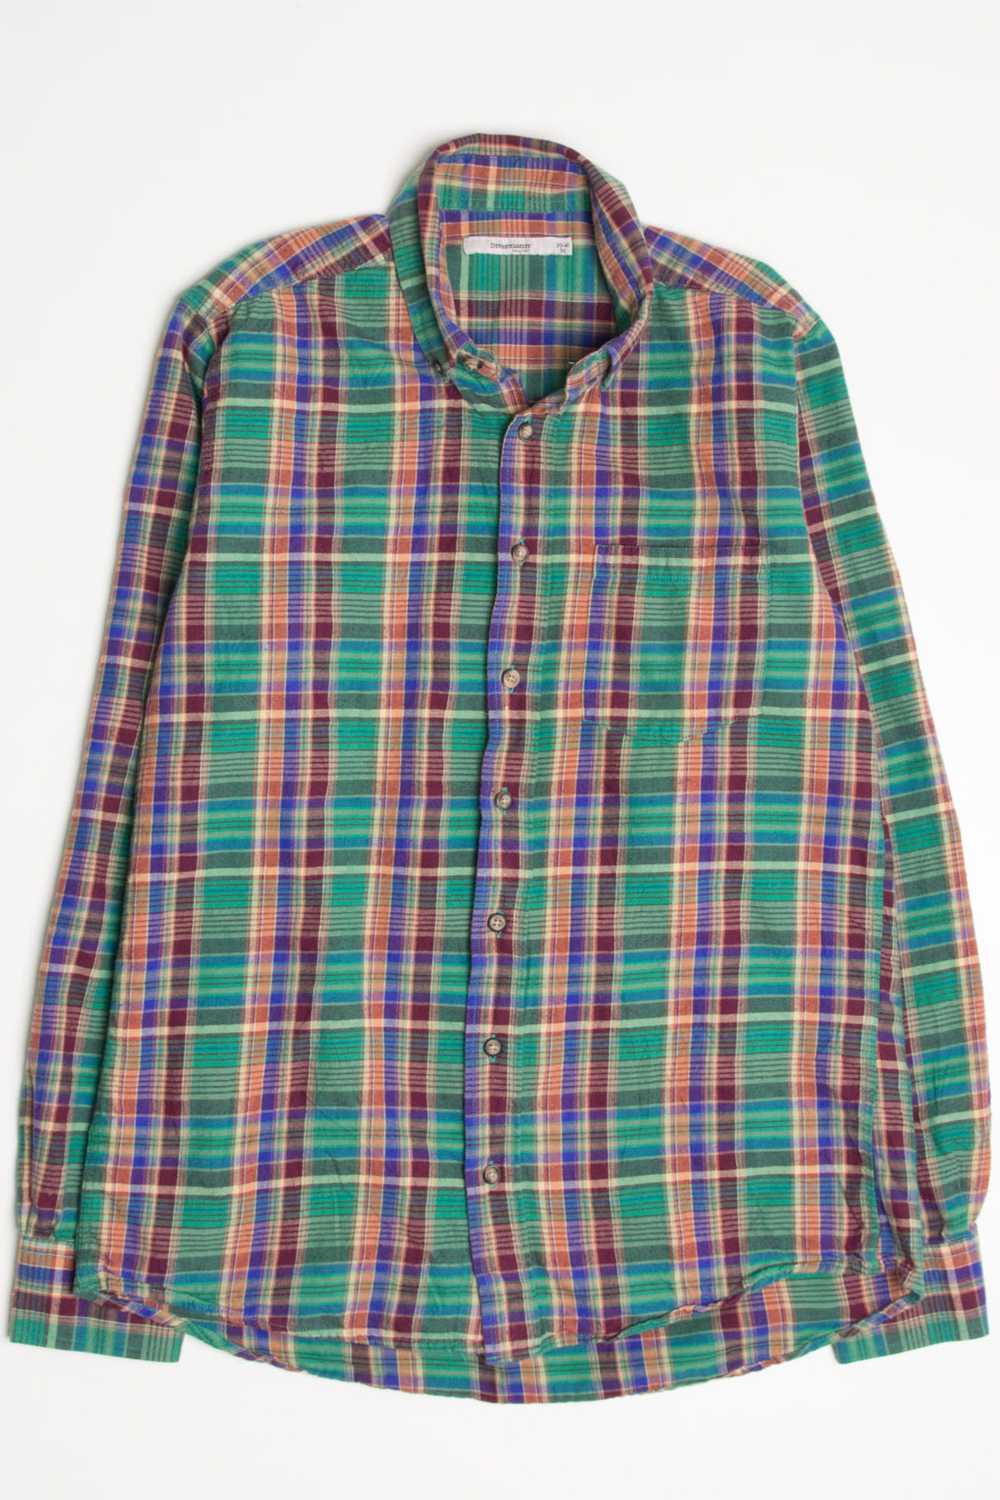 Vintage Kelly Green Flannel Shirt 4395 - image 2